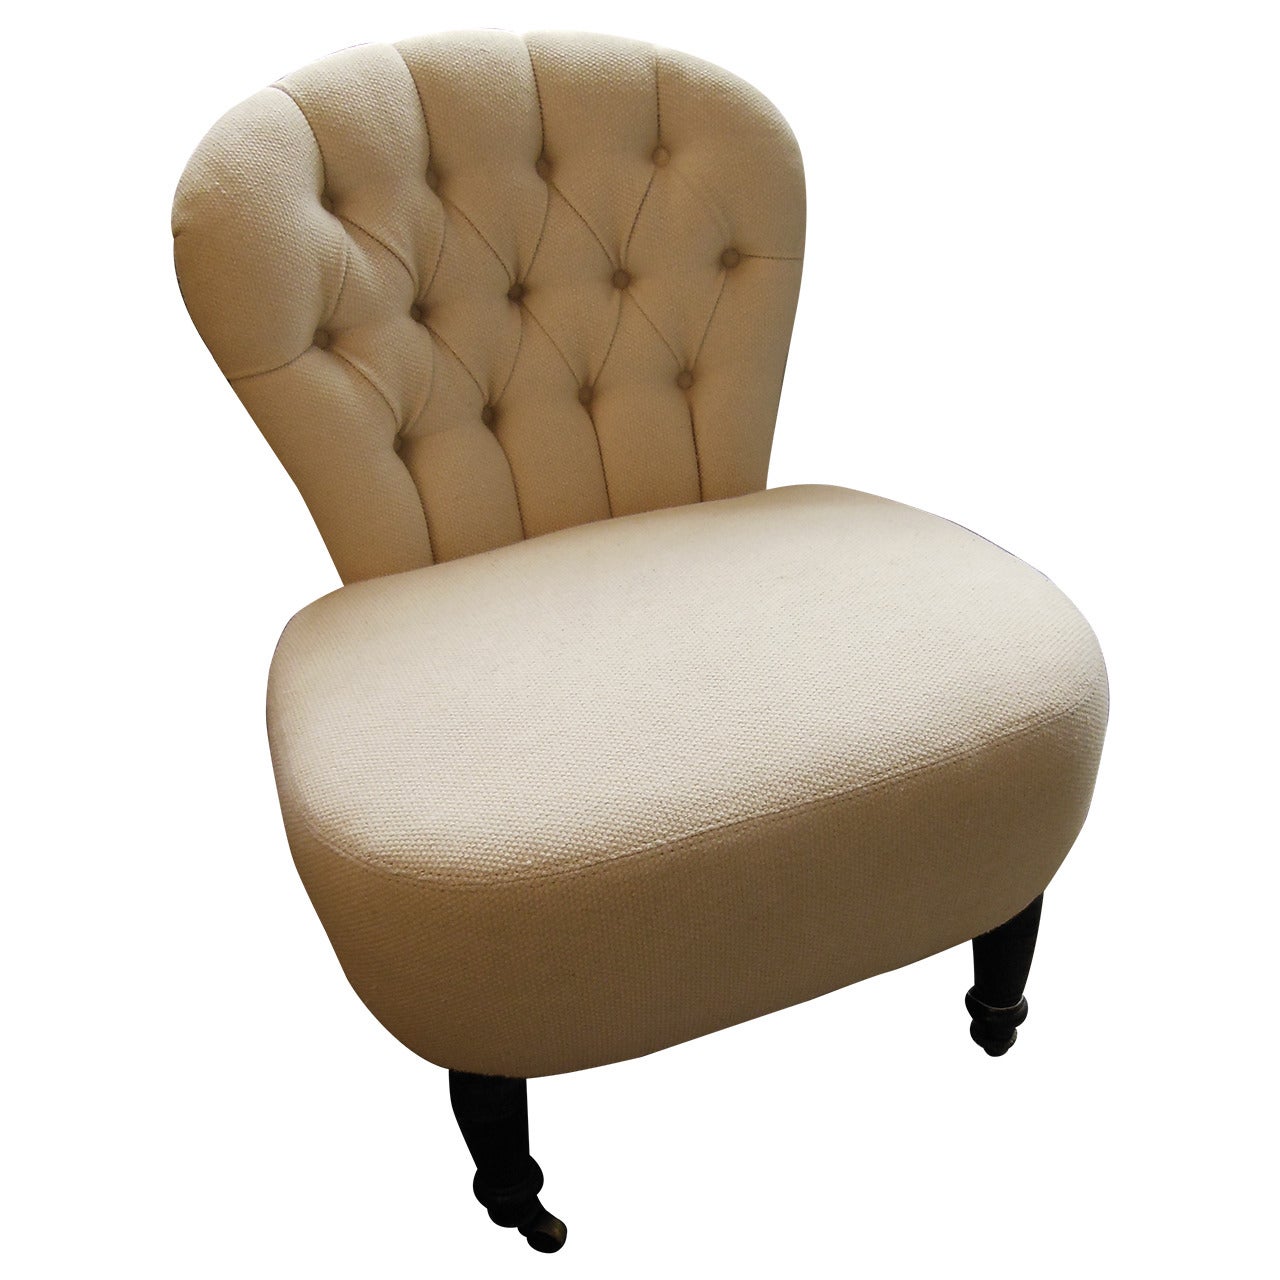 Diminutive Edwardian Chair